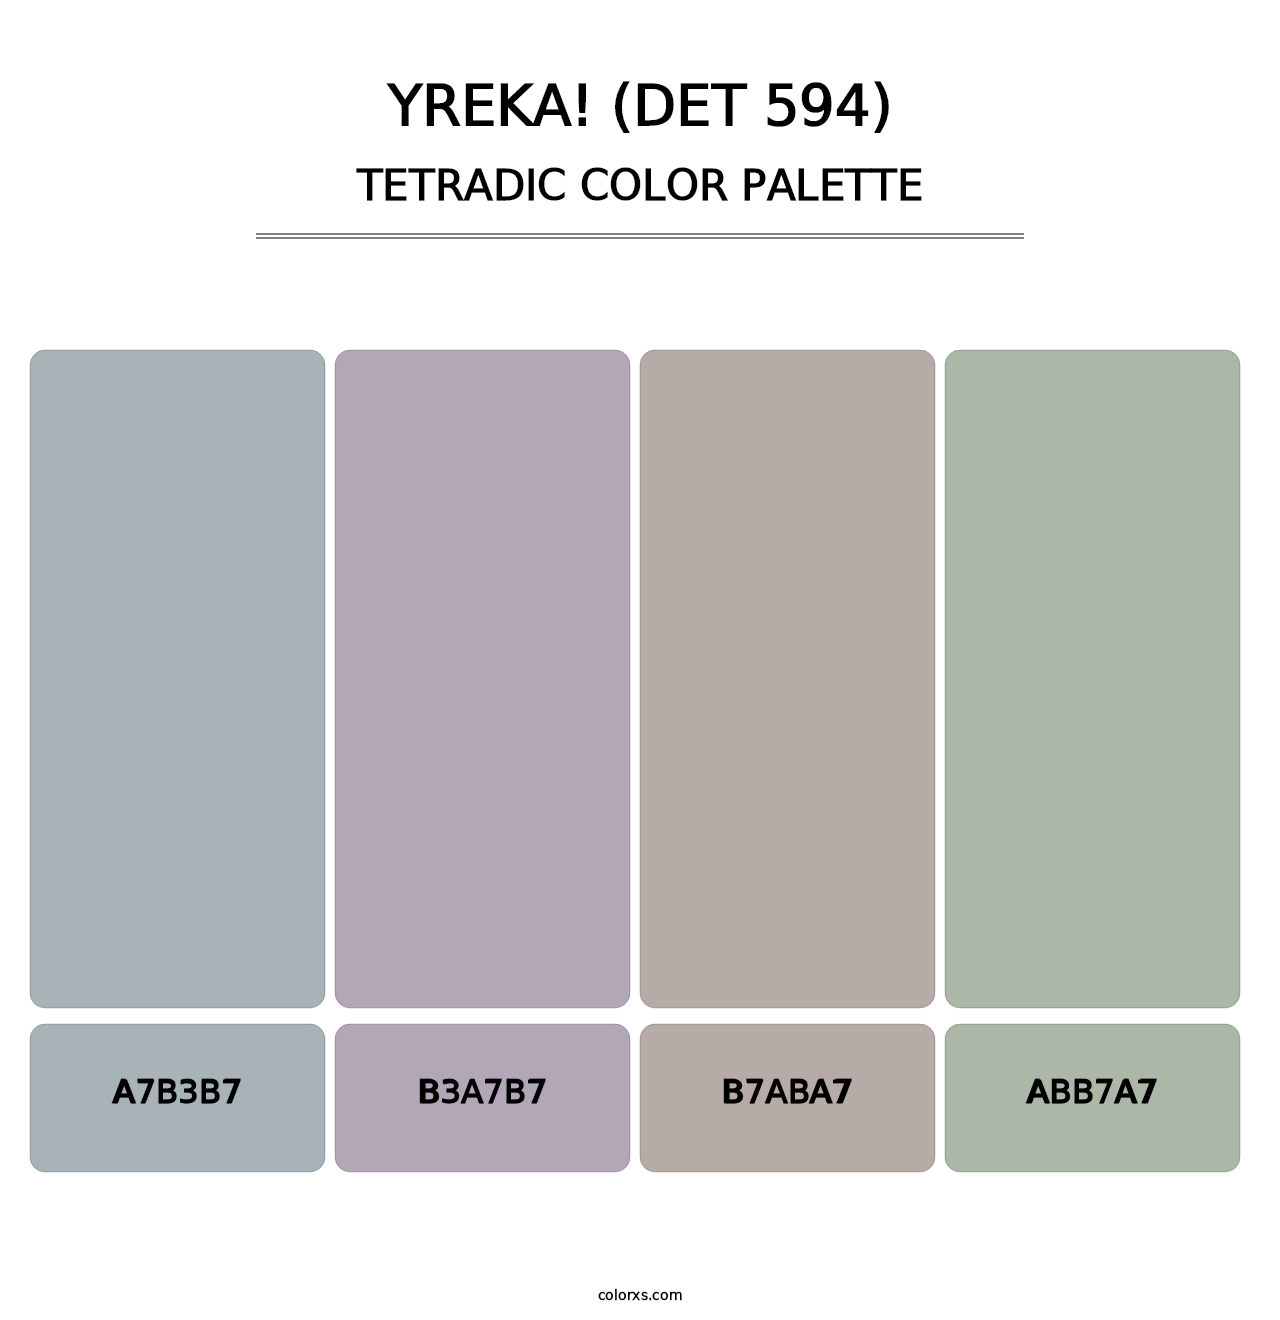 Yreka! (DET 594) - Tetradic Color Palette